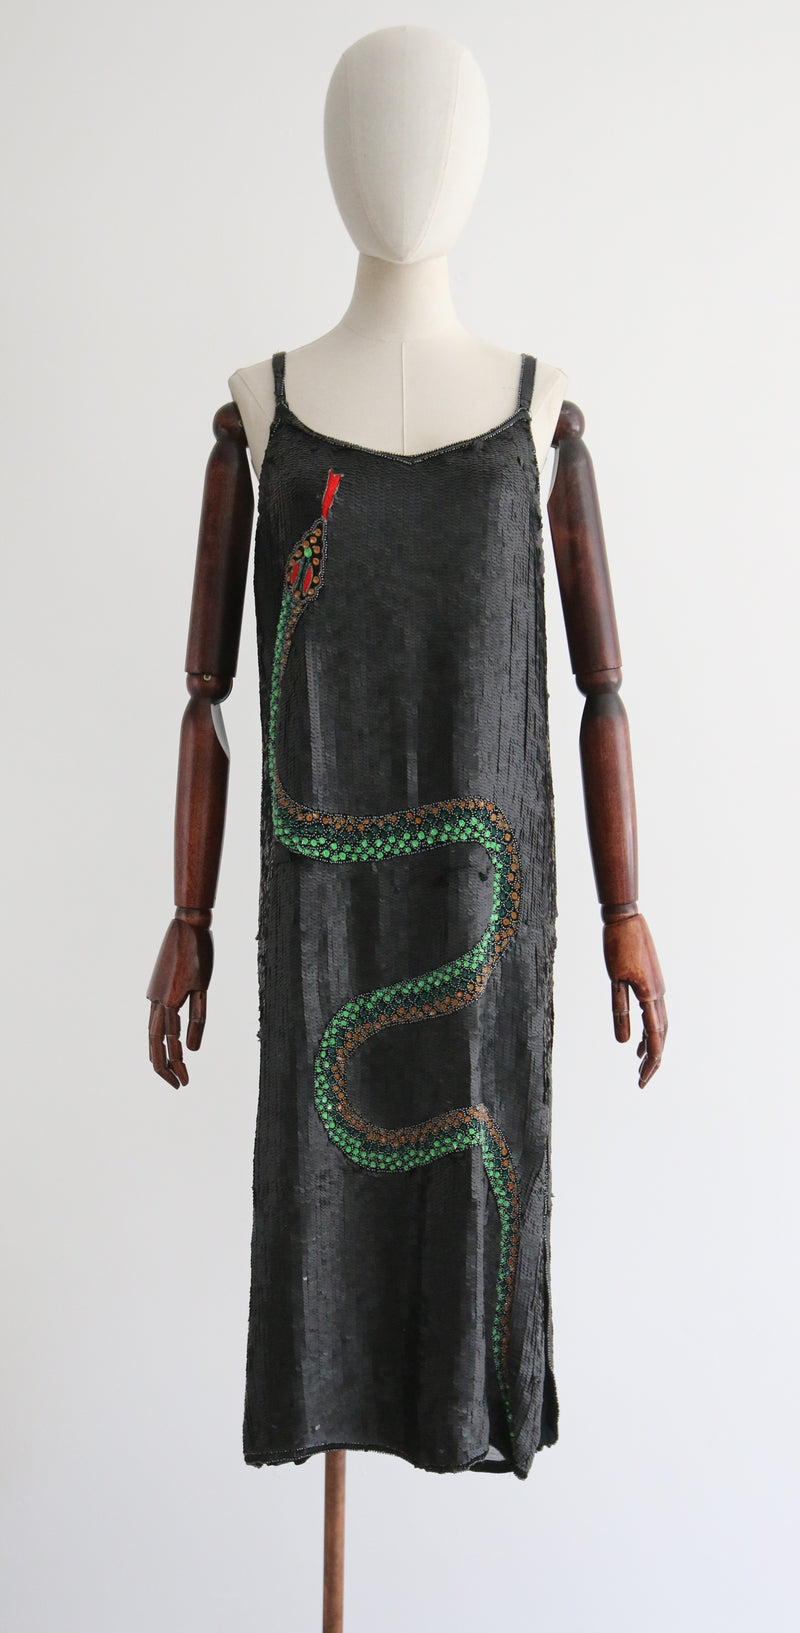 "Sequin Serpent" Vintage Silk Beaded & Sequinned Serpent Dress UK 12-14 US 8-10